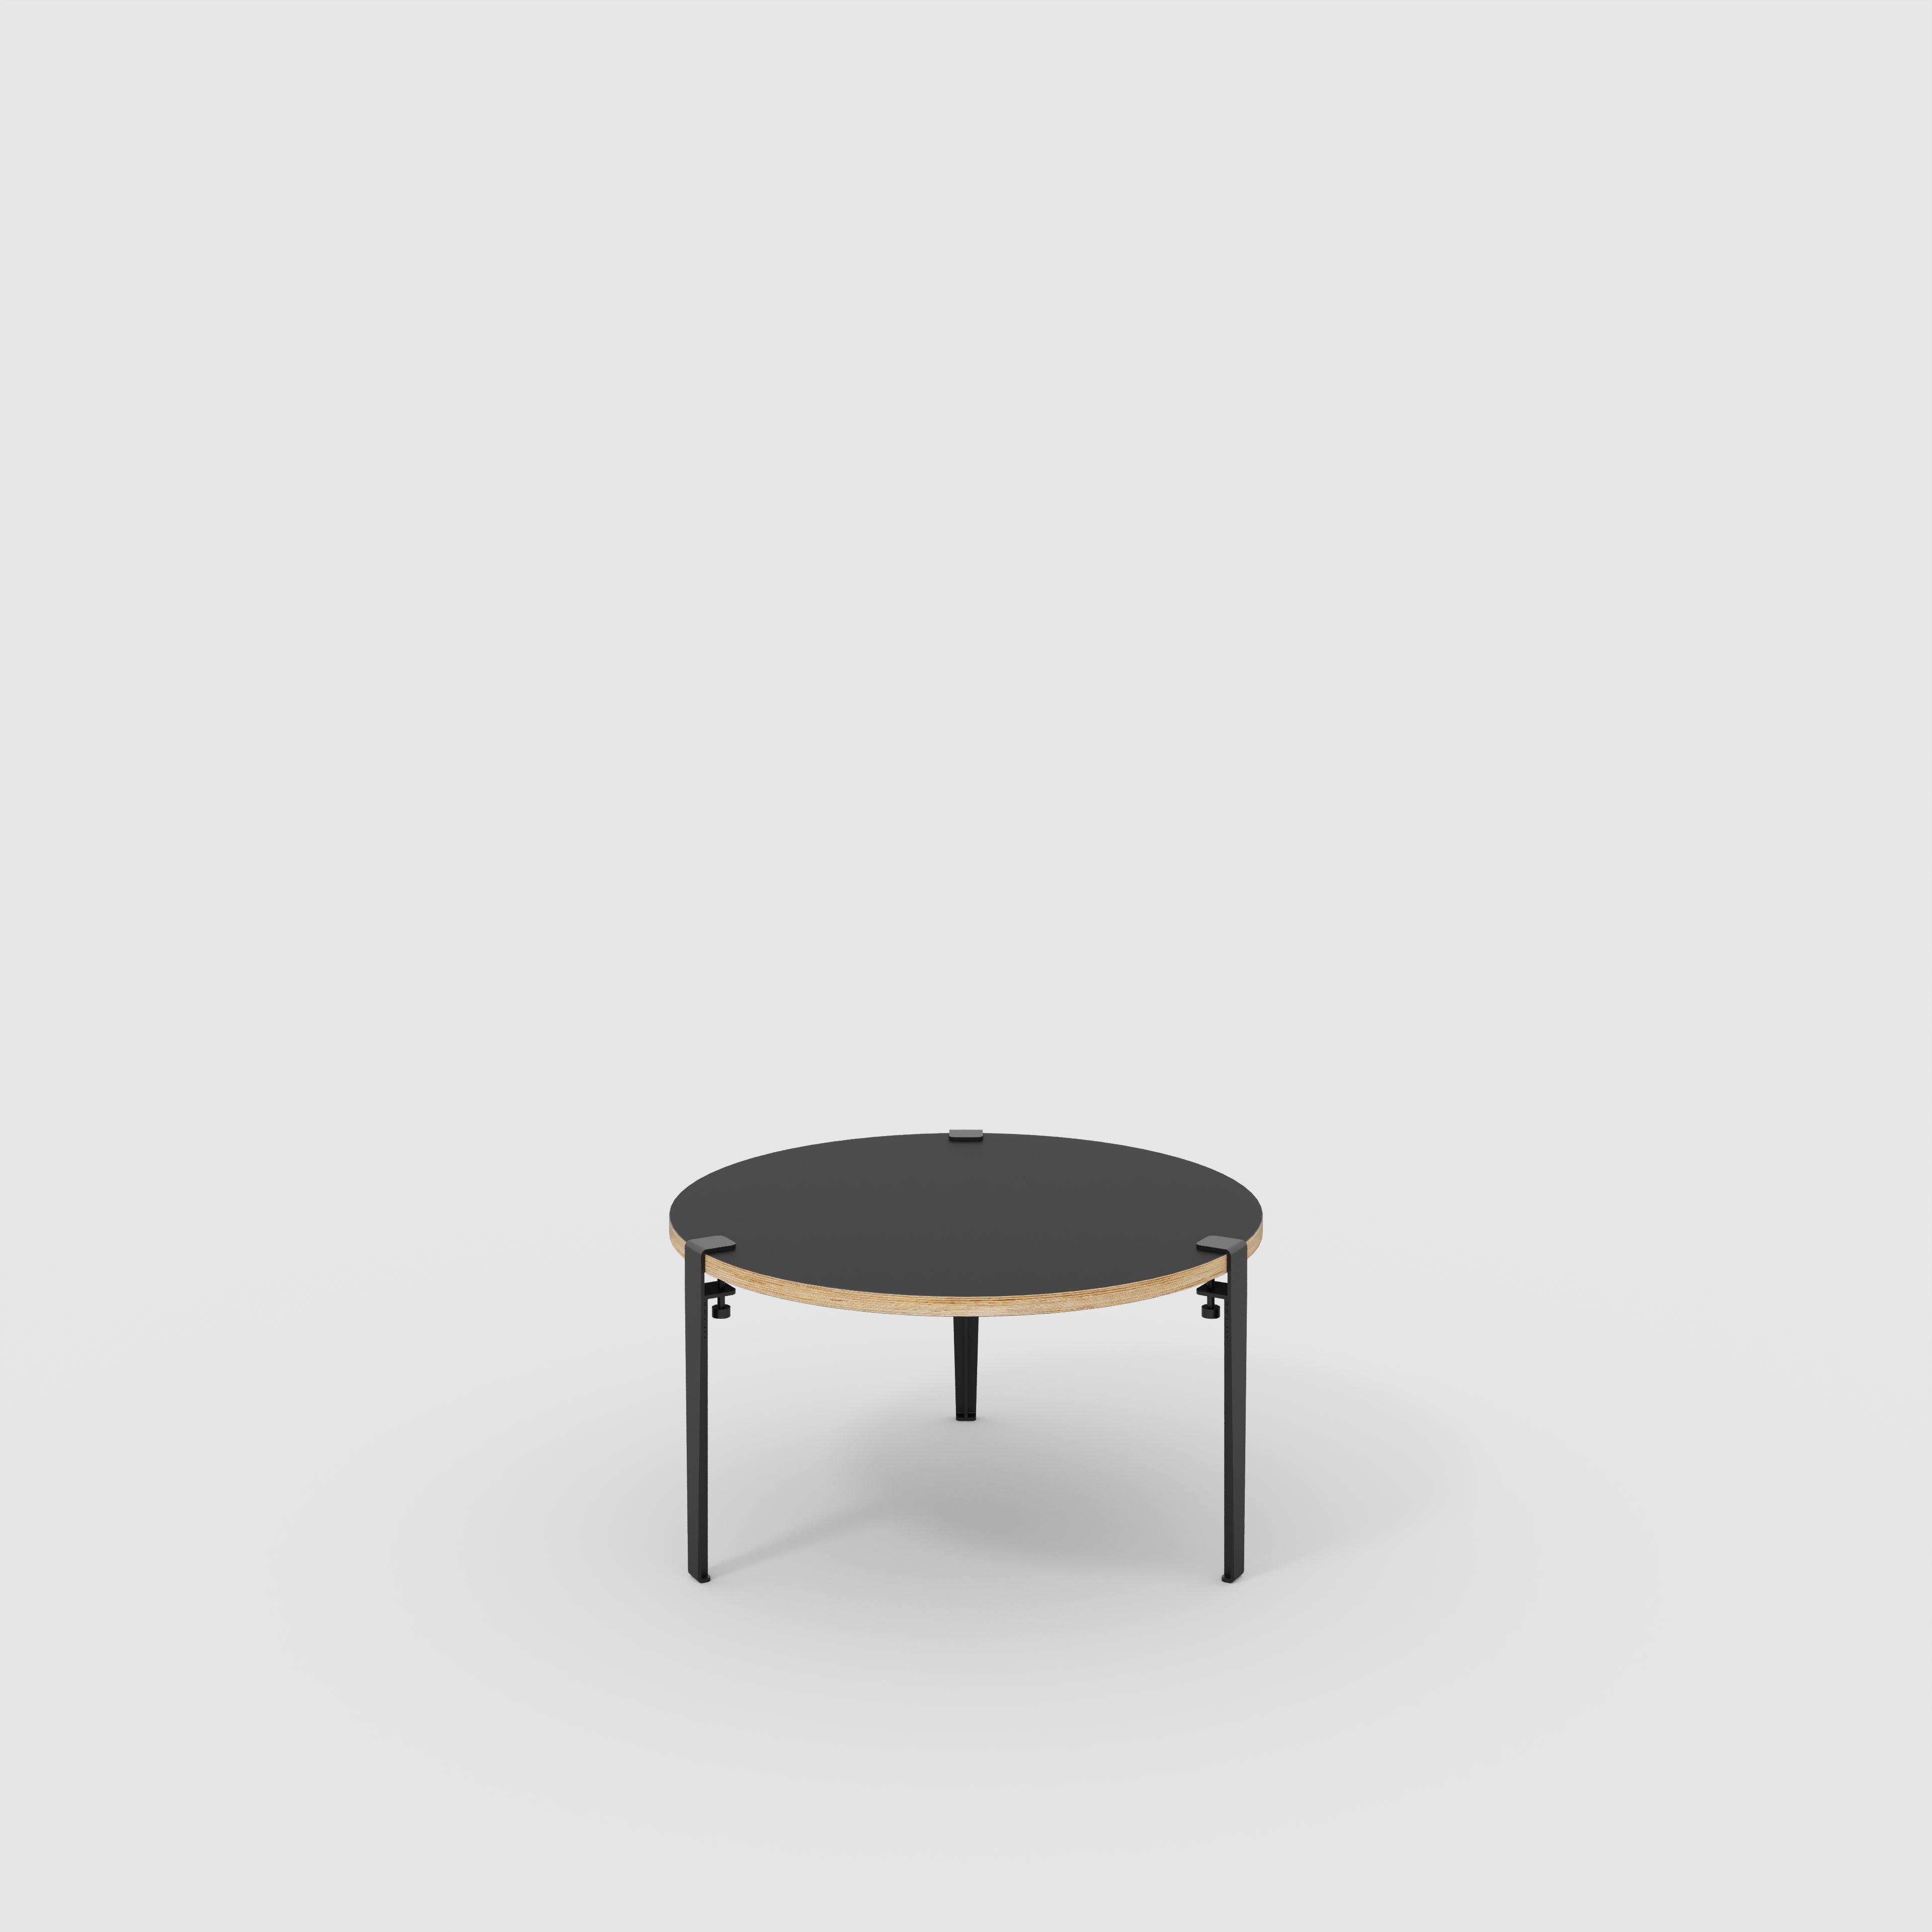 Round Coffee Table with Black Tiptoe Legs - Formica Diamond Black - 800(dia) x 430(h)